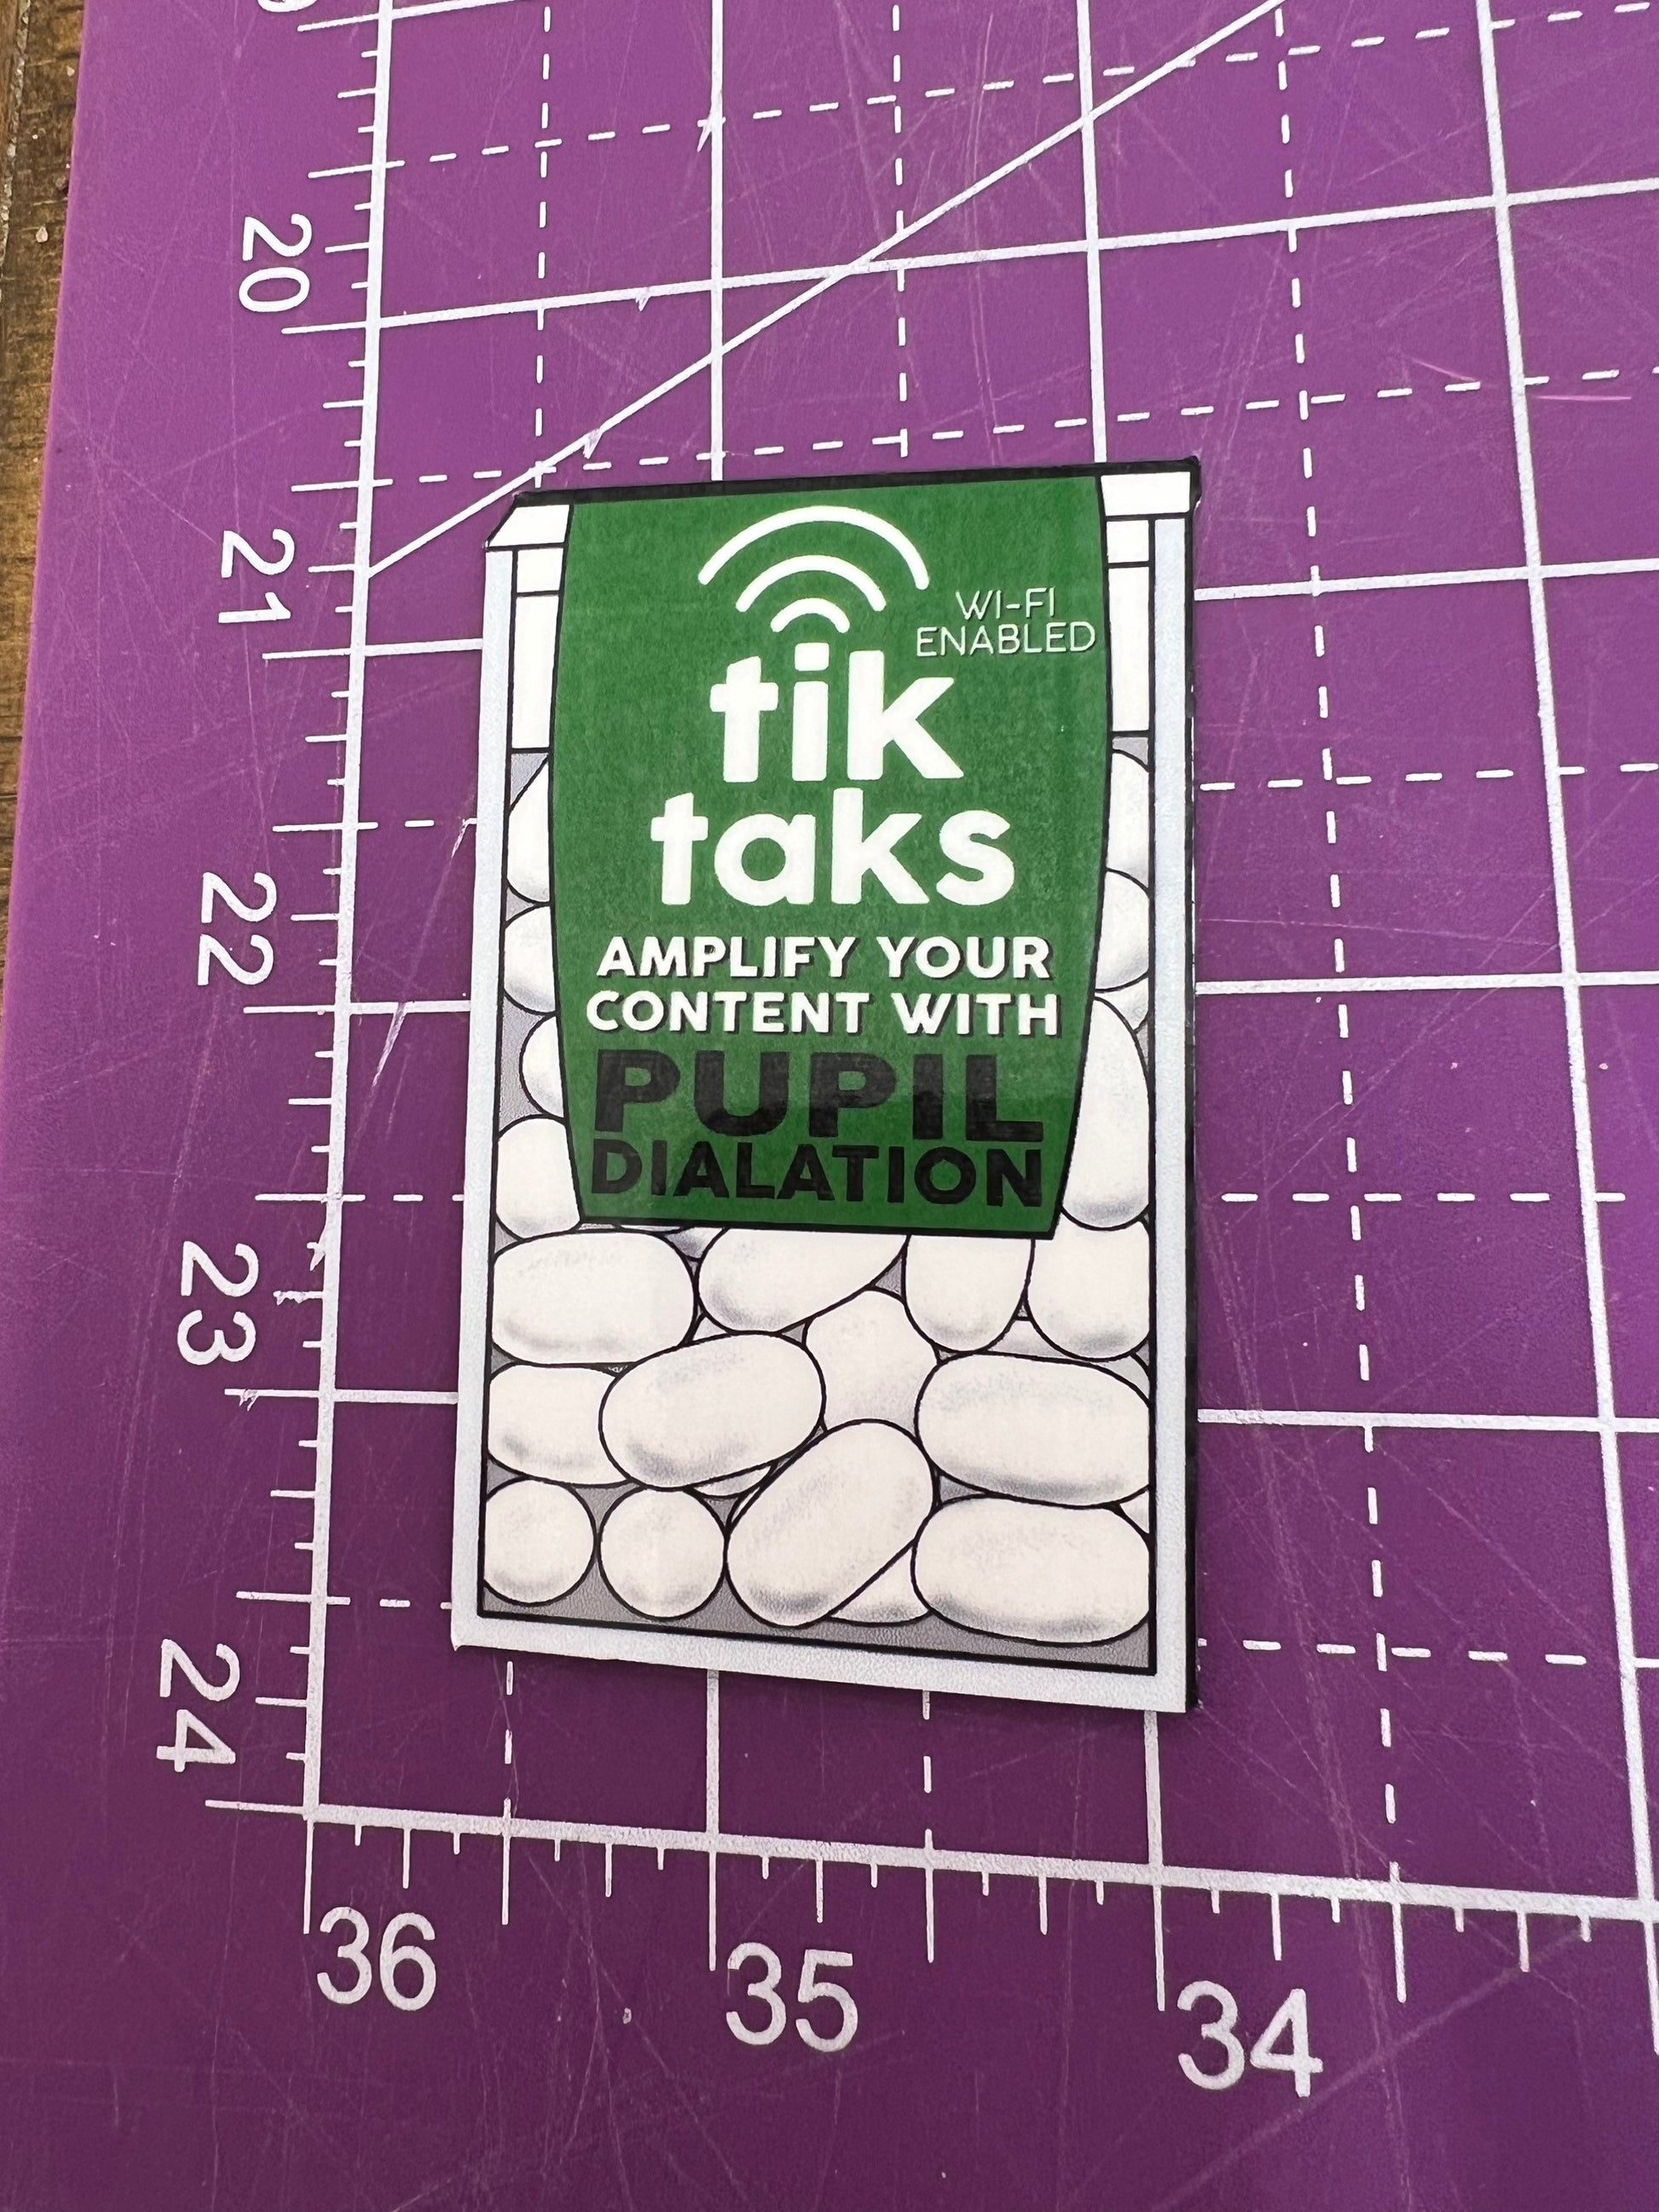 TikTok “Tik Taks” Wi-Fi Enabled Pupil “Dialation” to Amplify your Content Sticker